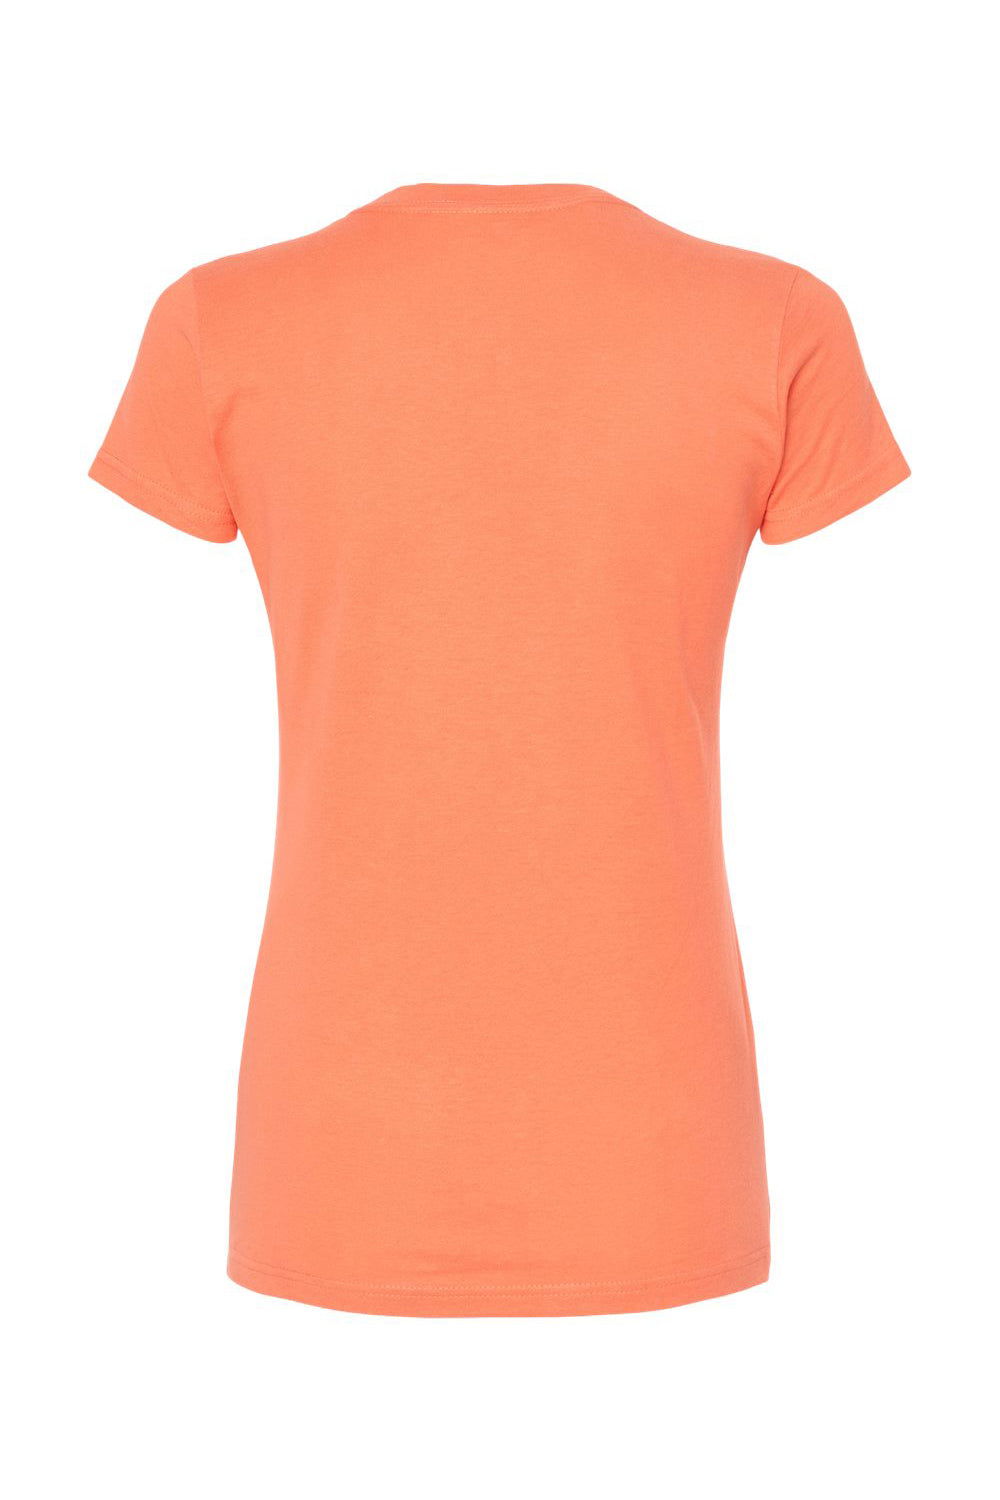 Tultex 213 Womens Fine Jersey Slim Fit Short Sleeve Crewneck T-Shirt Coral Orange Flat Back